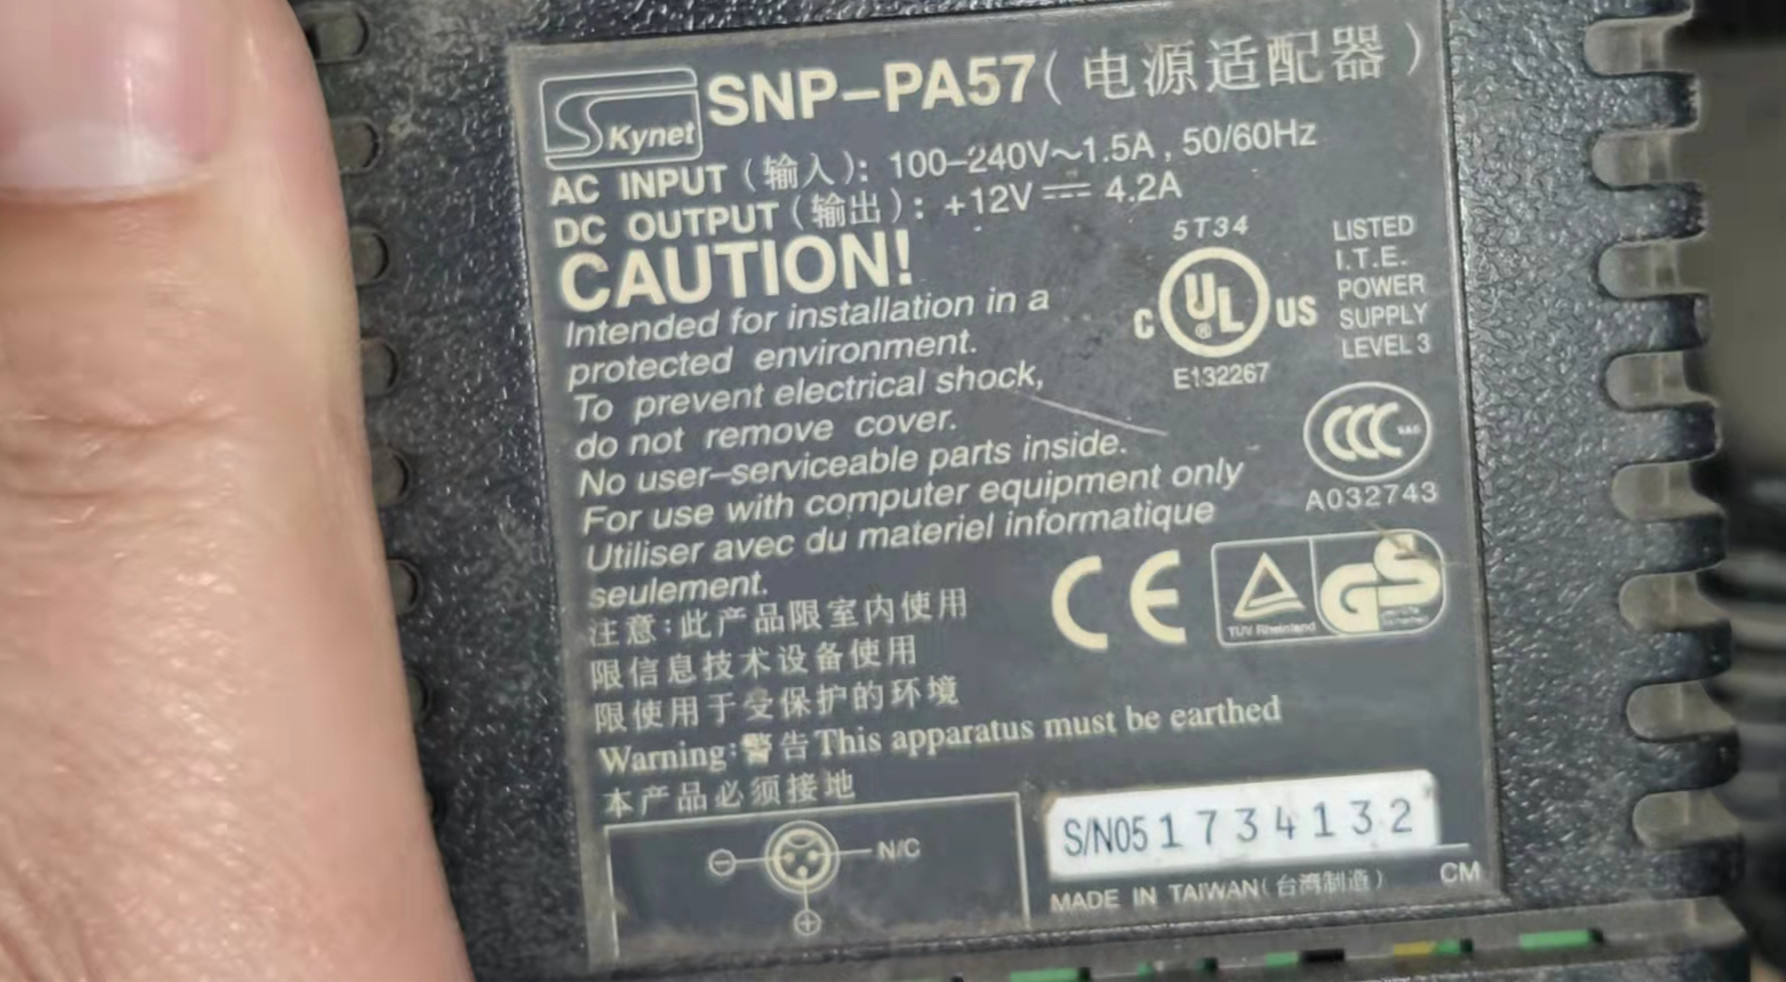 SKYNET SNP-PA57 12V/4.2A power adapter 3pin AC input: 100-240v 1.3a 50-60hz DC output: 12v 4.2a free power cord will fi